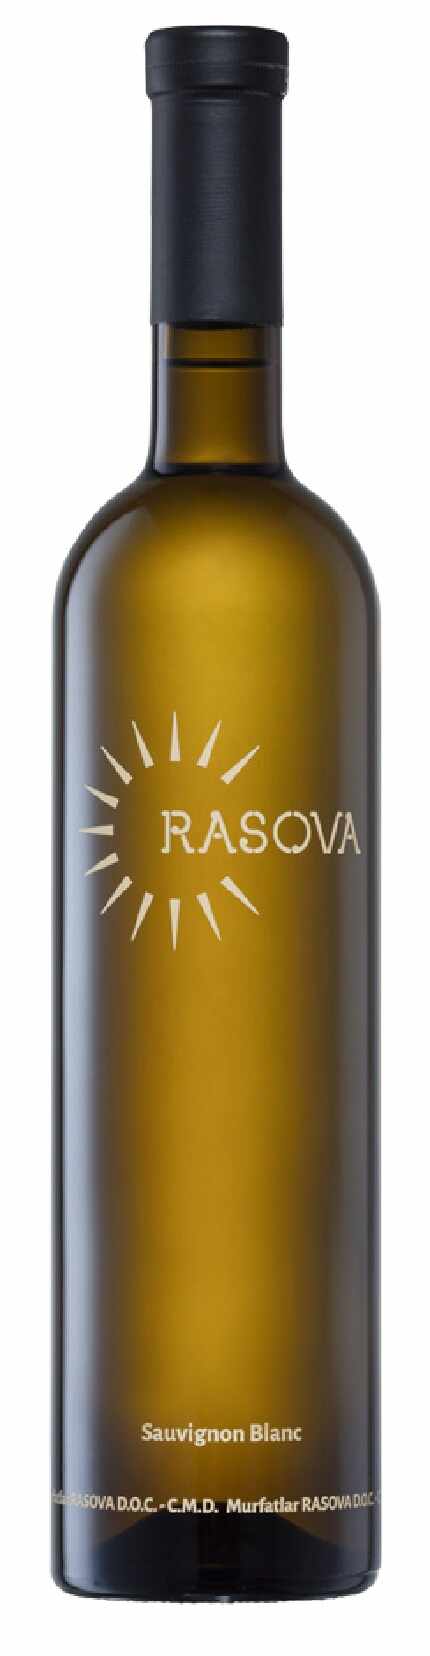 Vin alb - Premium, Sauvignon Blanc, sec, 2018 | Crama Rasova